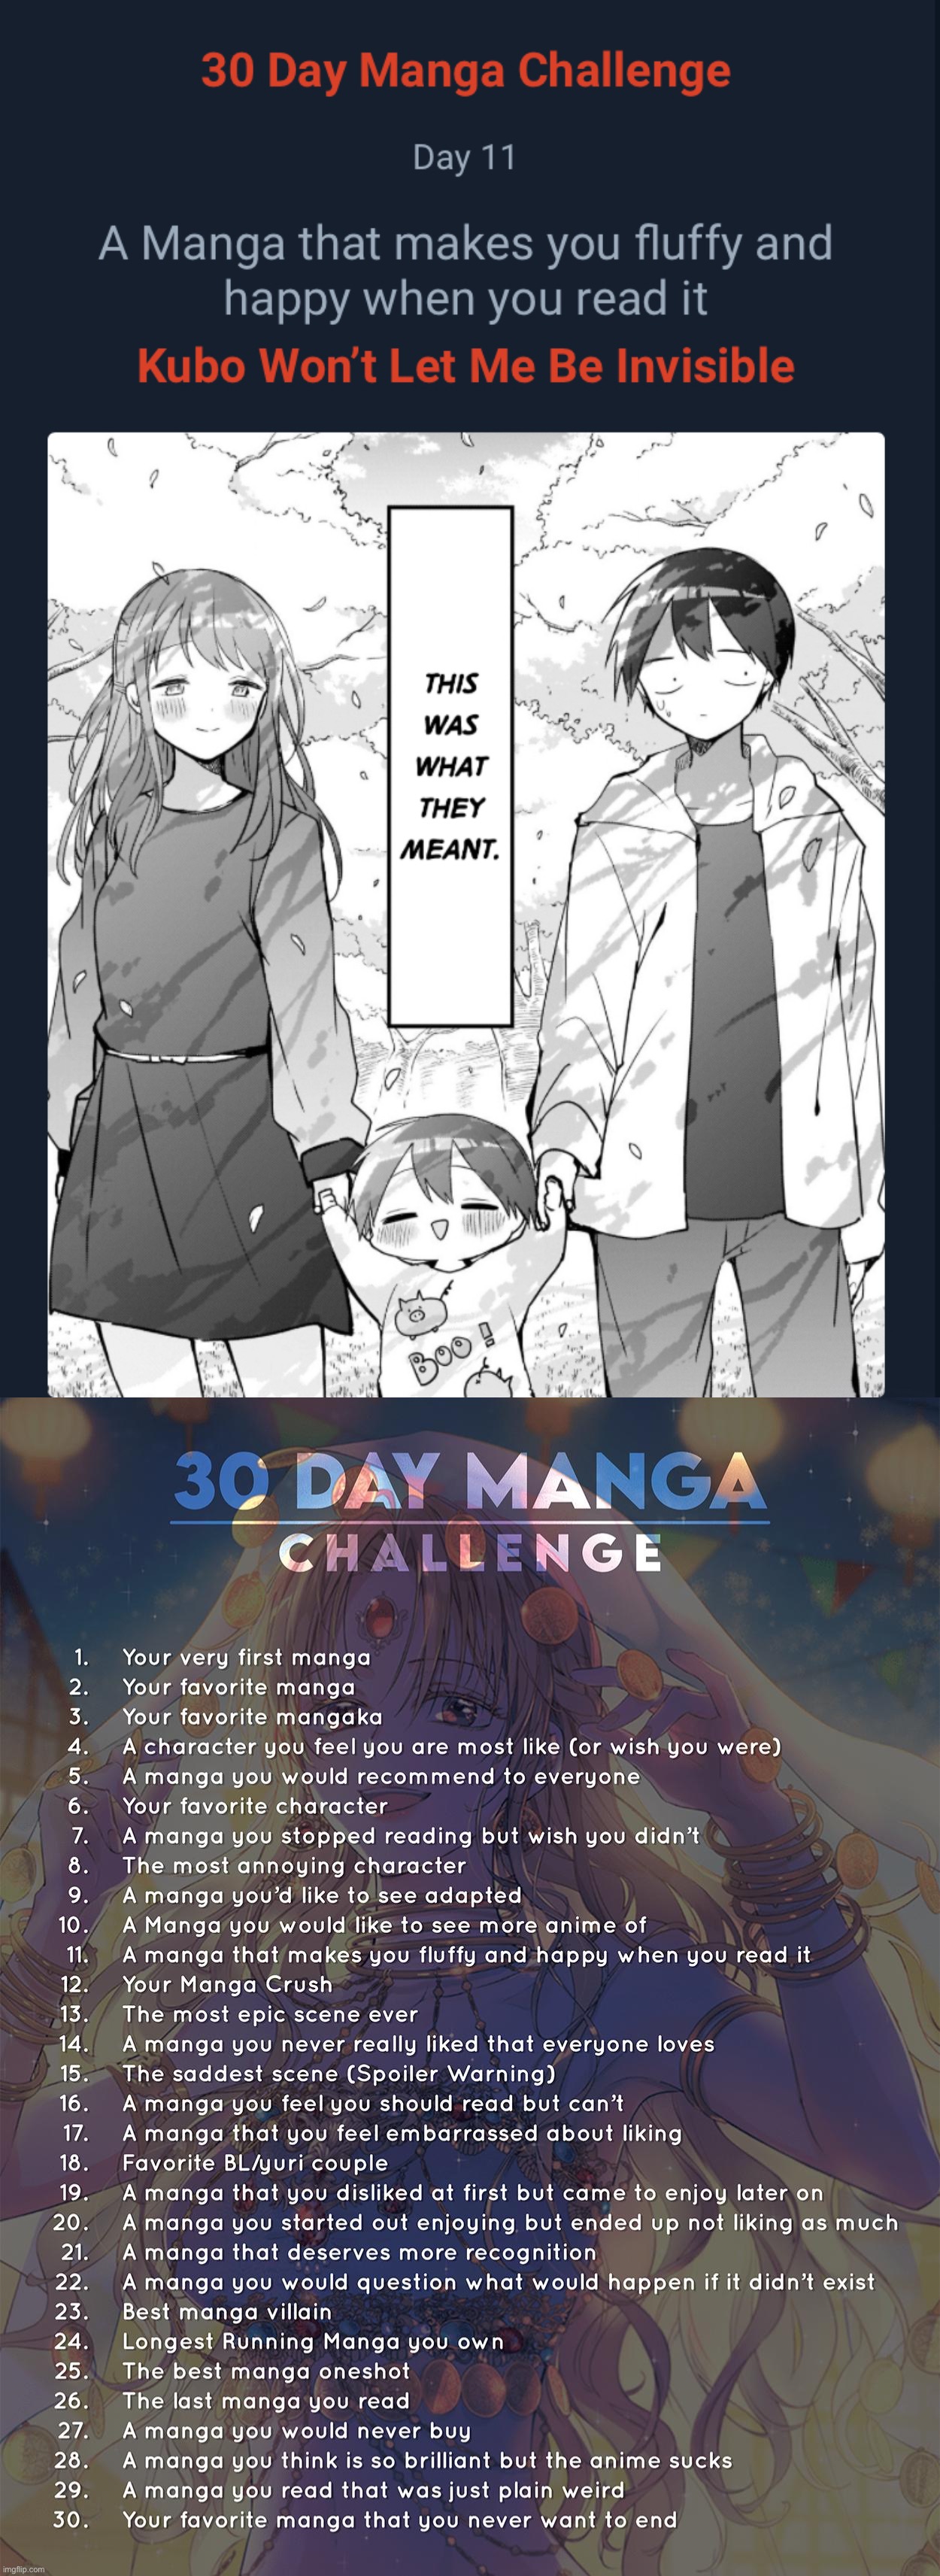 I love this manga | image tagged in 30 day manga challenge | made w/ Imgflip meme maker